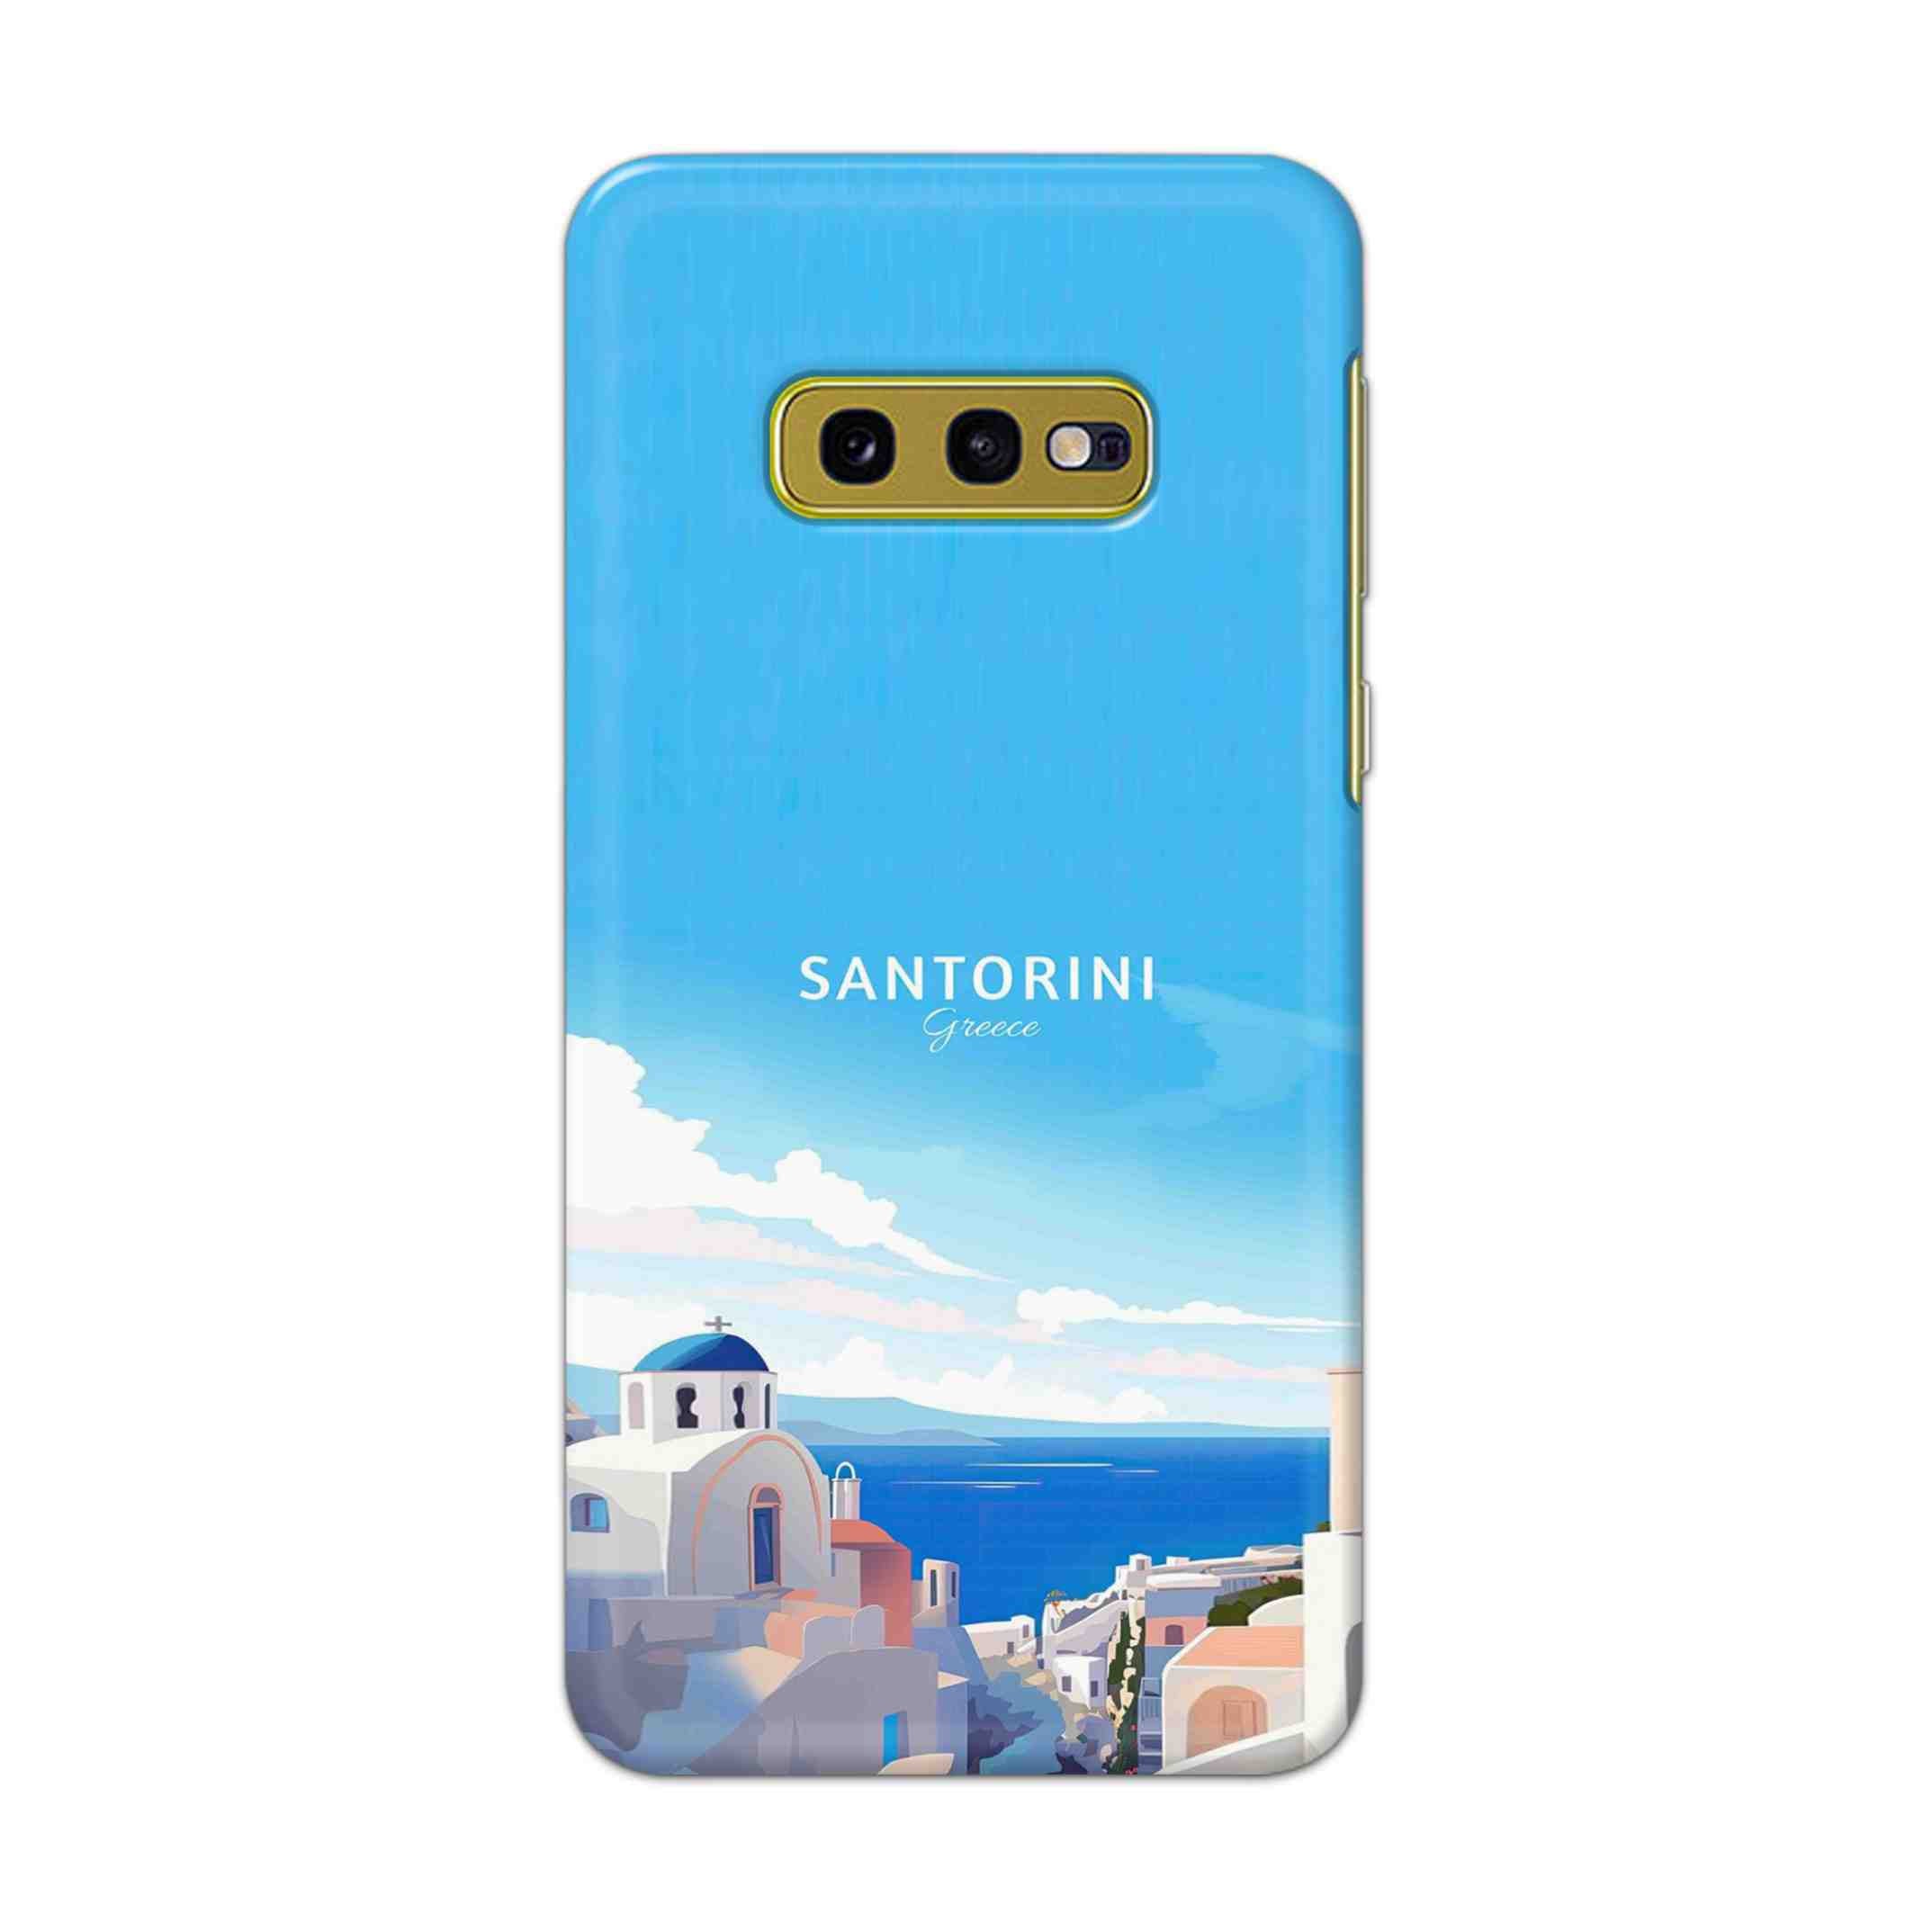 Buy Santorini Hard Back Mobile Phone Case Cover For Samsung Galaxy S10e Online